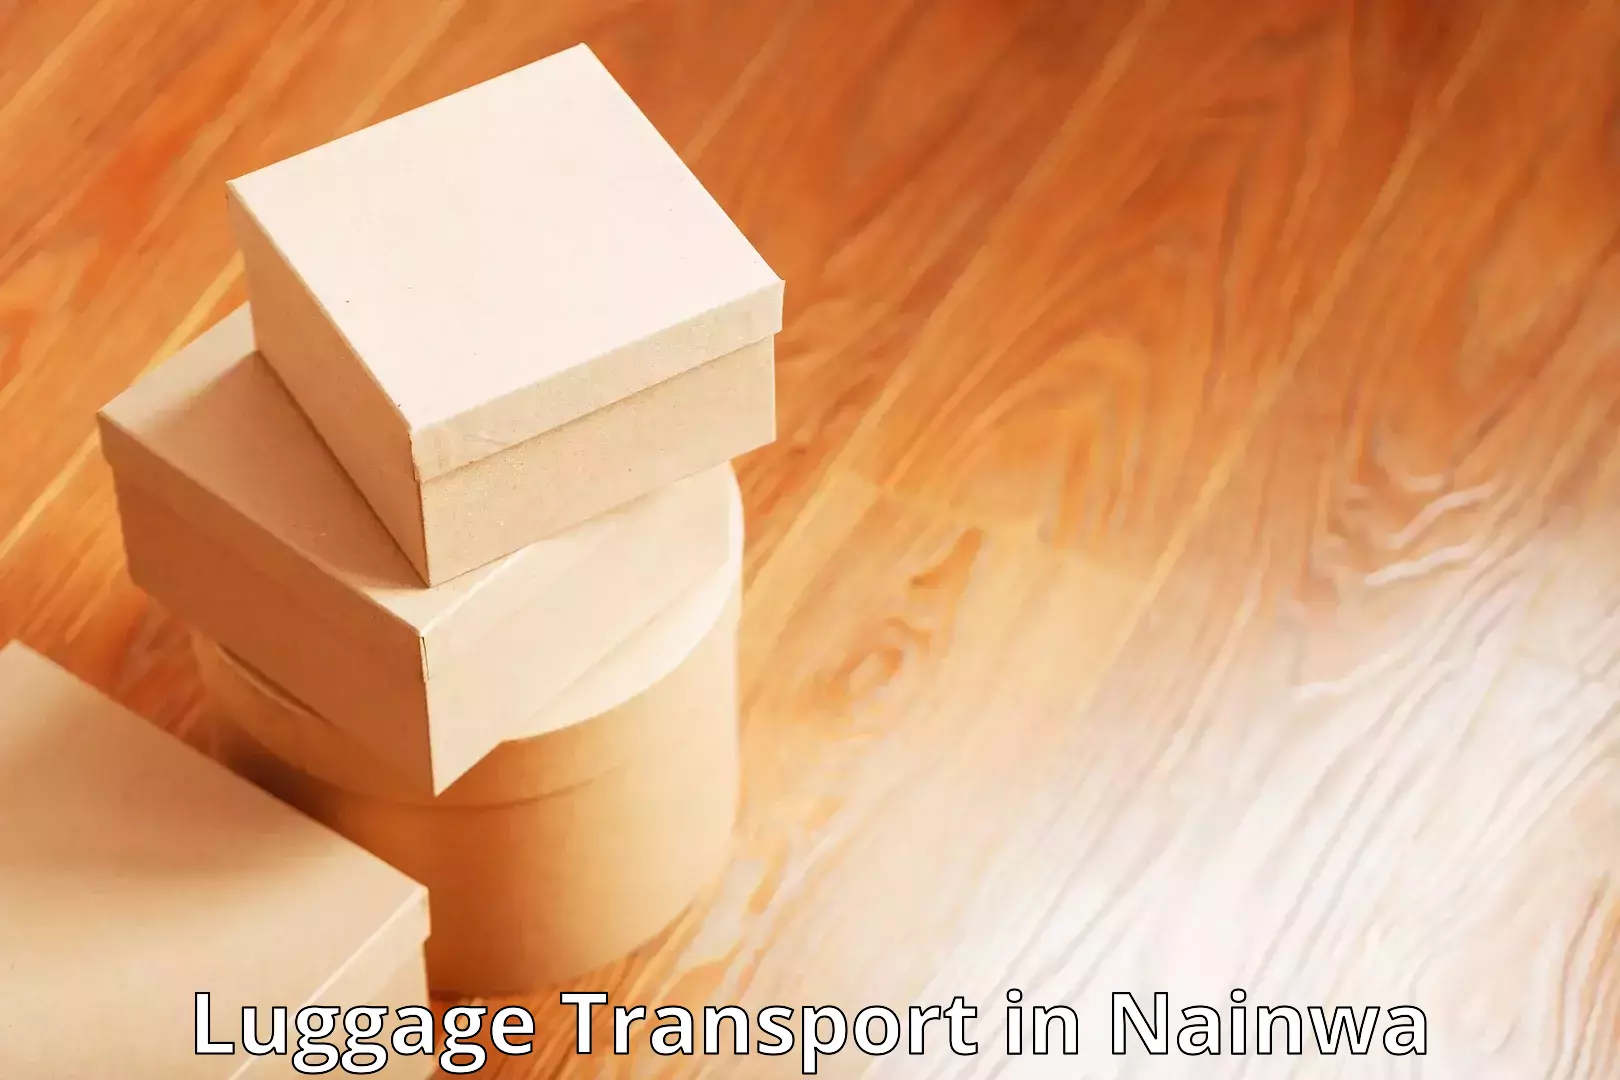 Domestic luggage transport in Nainwa